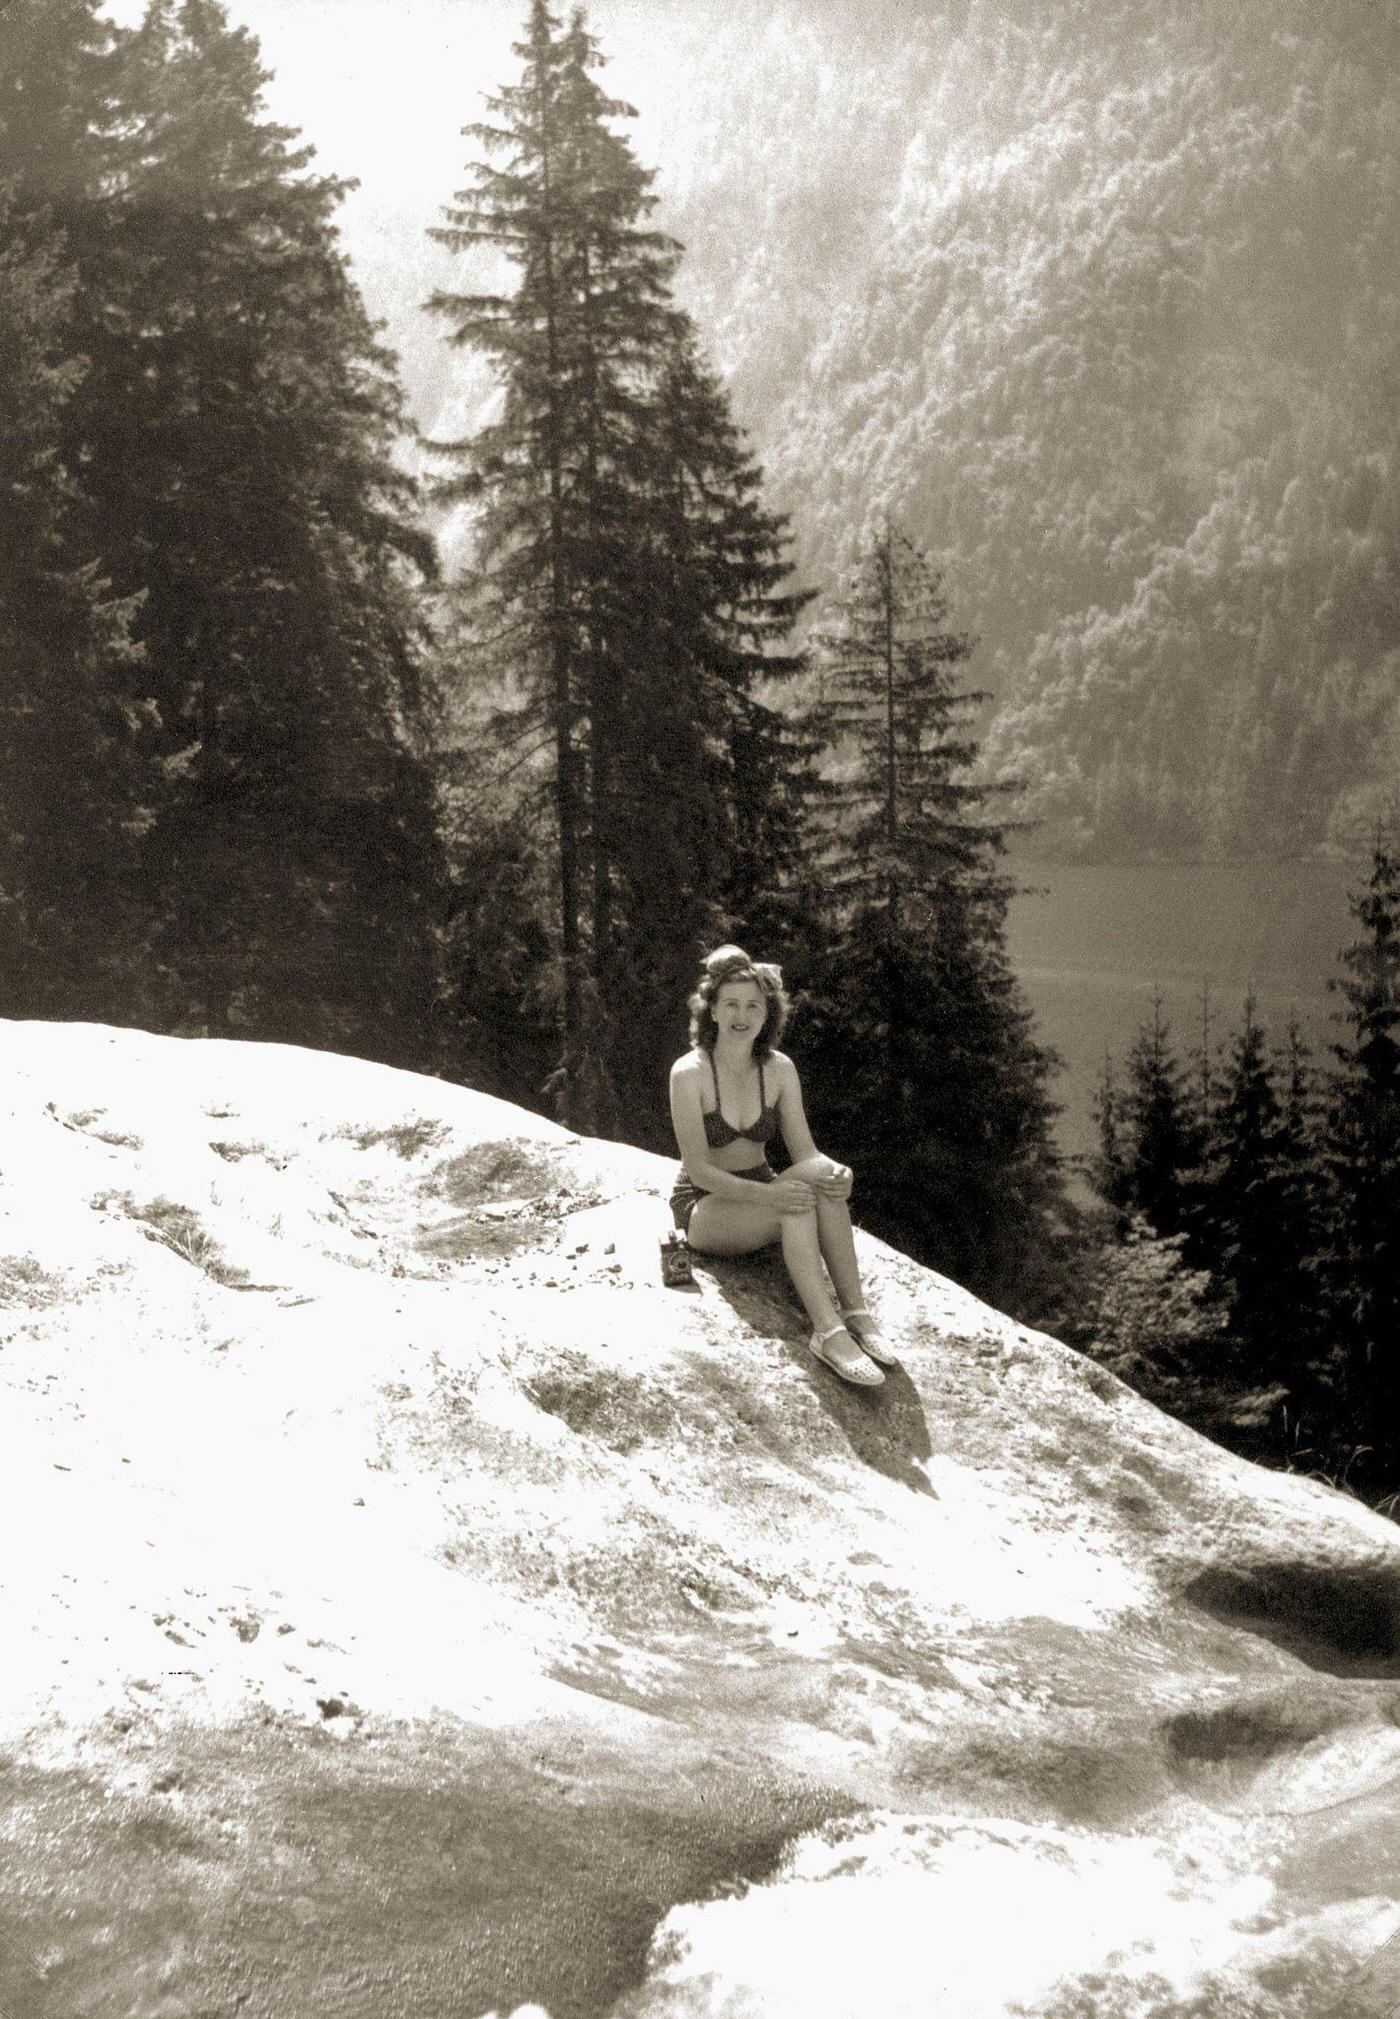 Eva Braun sunbathing at Konigssee, near Berghof, Berchtesgaden, Germany, 1945